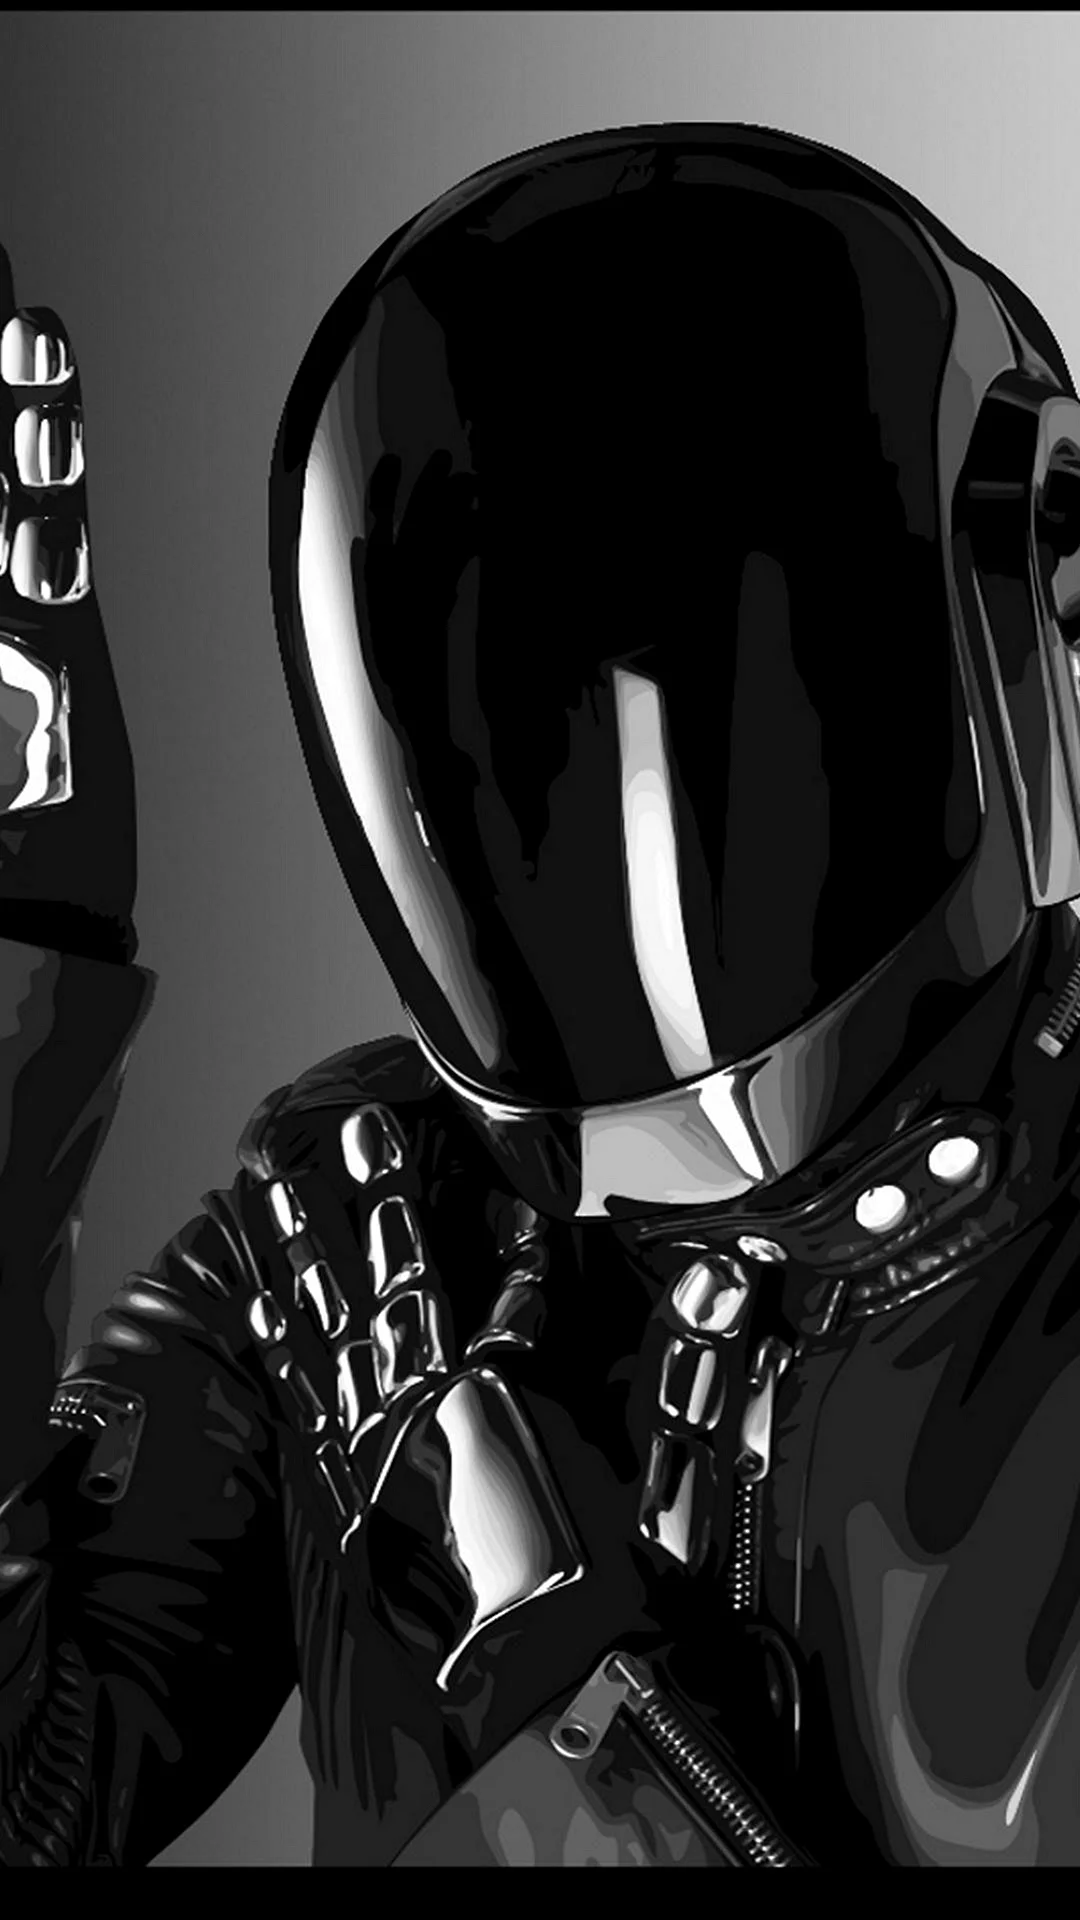 Daft Punk Wallpaper For iPhone